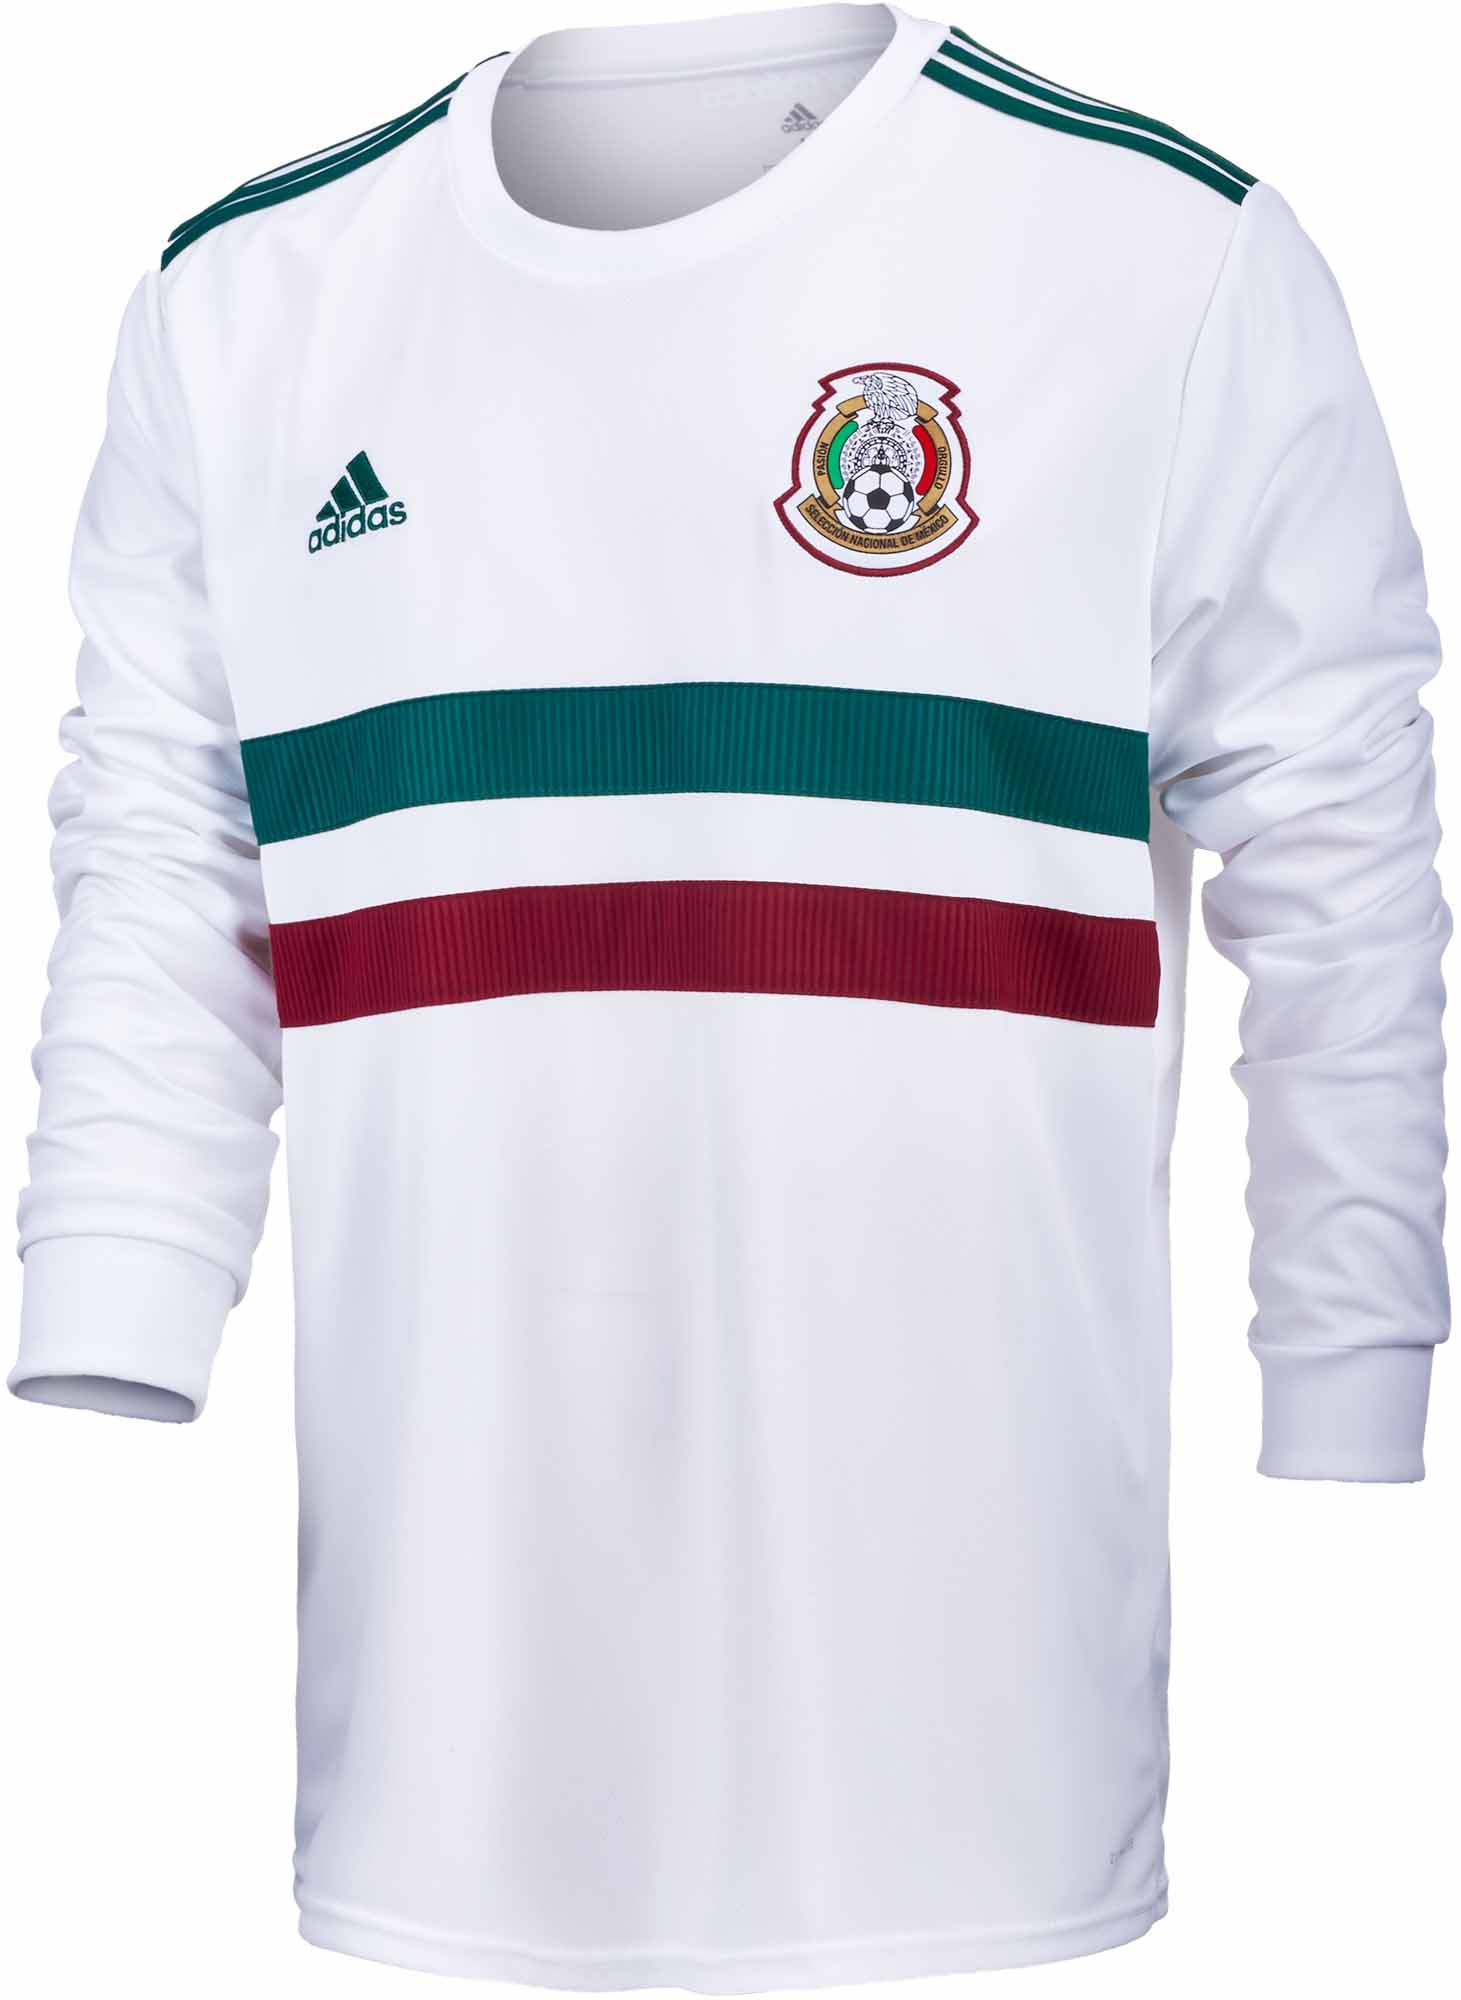 2018/19 adidas Mexico L/S Away Jersey - SoccerPro